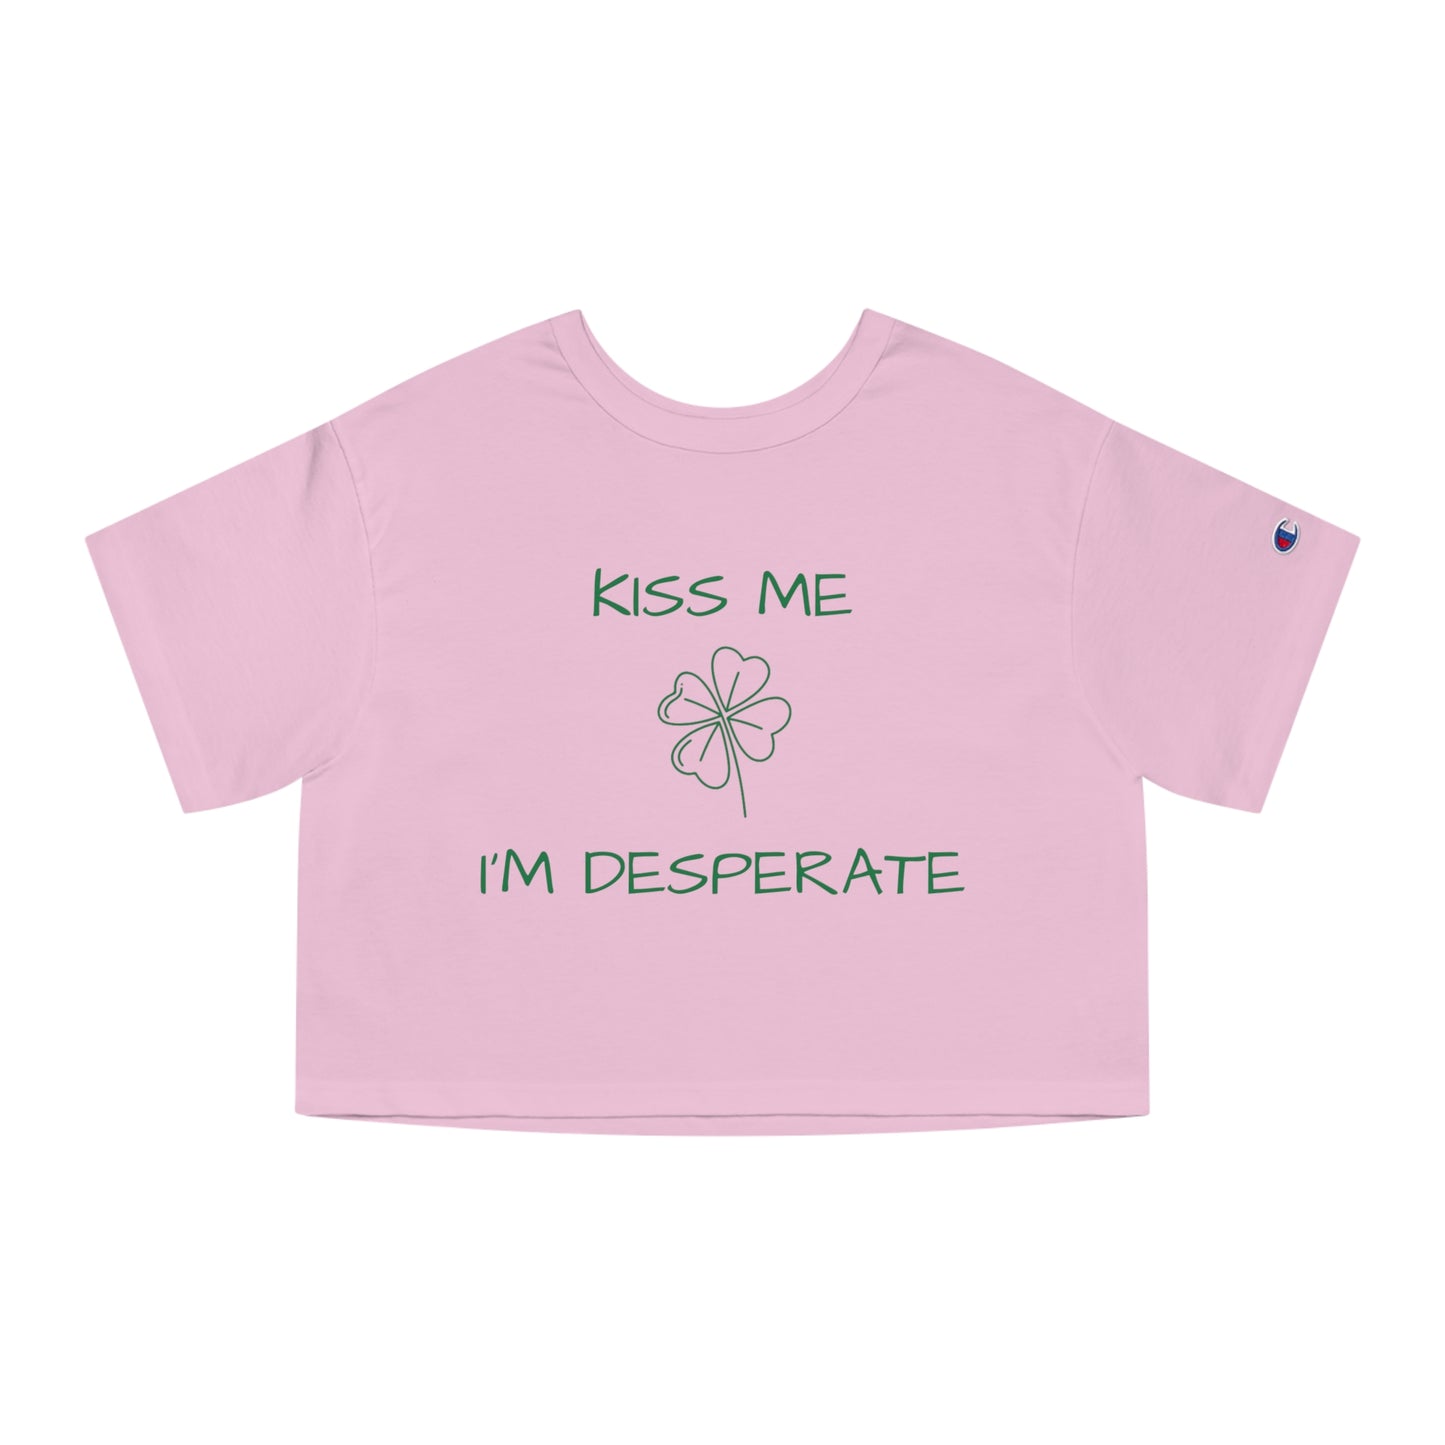 "Kiss me I'm desperate" - Champion™ crop top